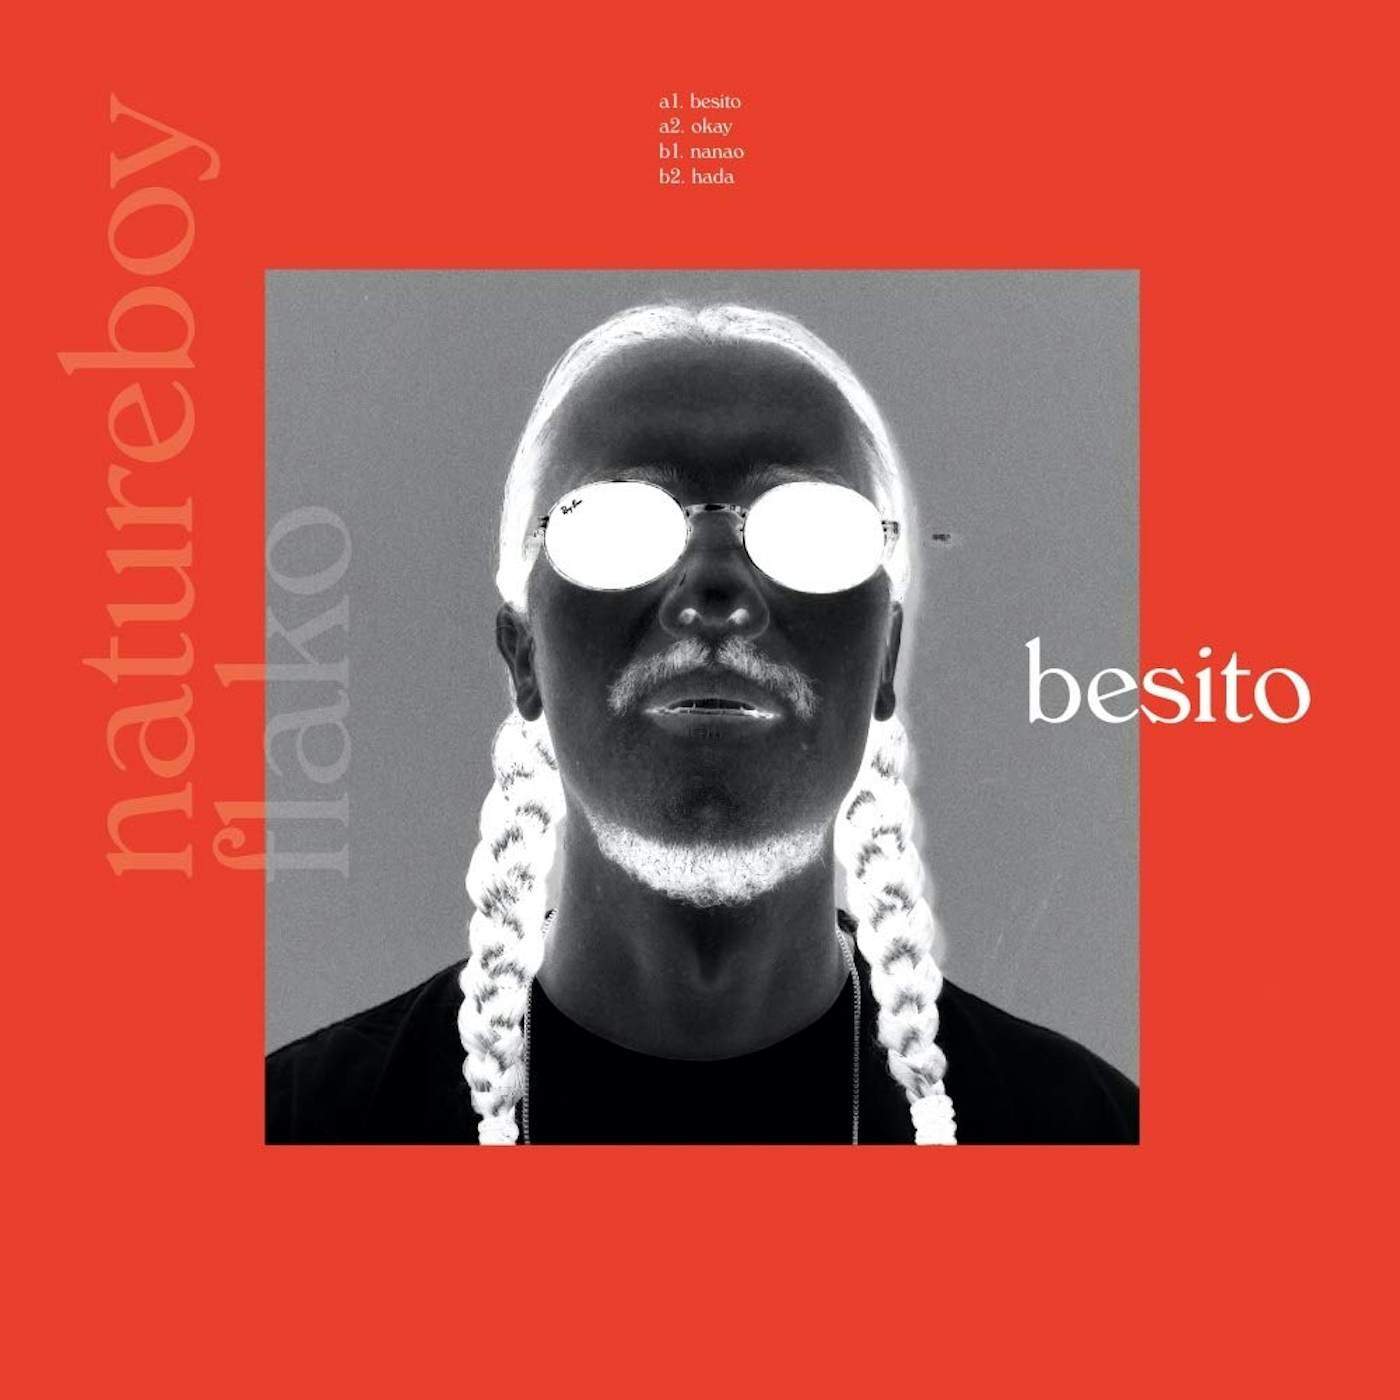 Natureboy Flako Besito Vinyl Record